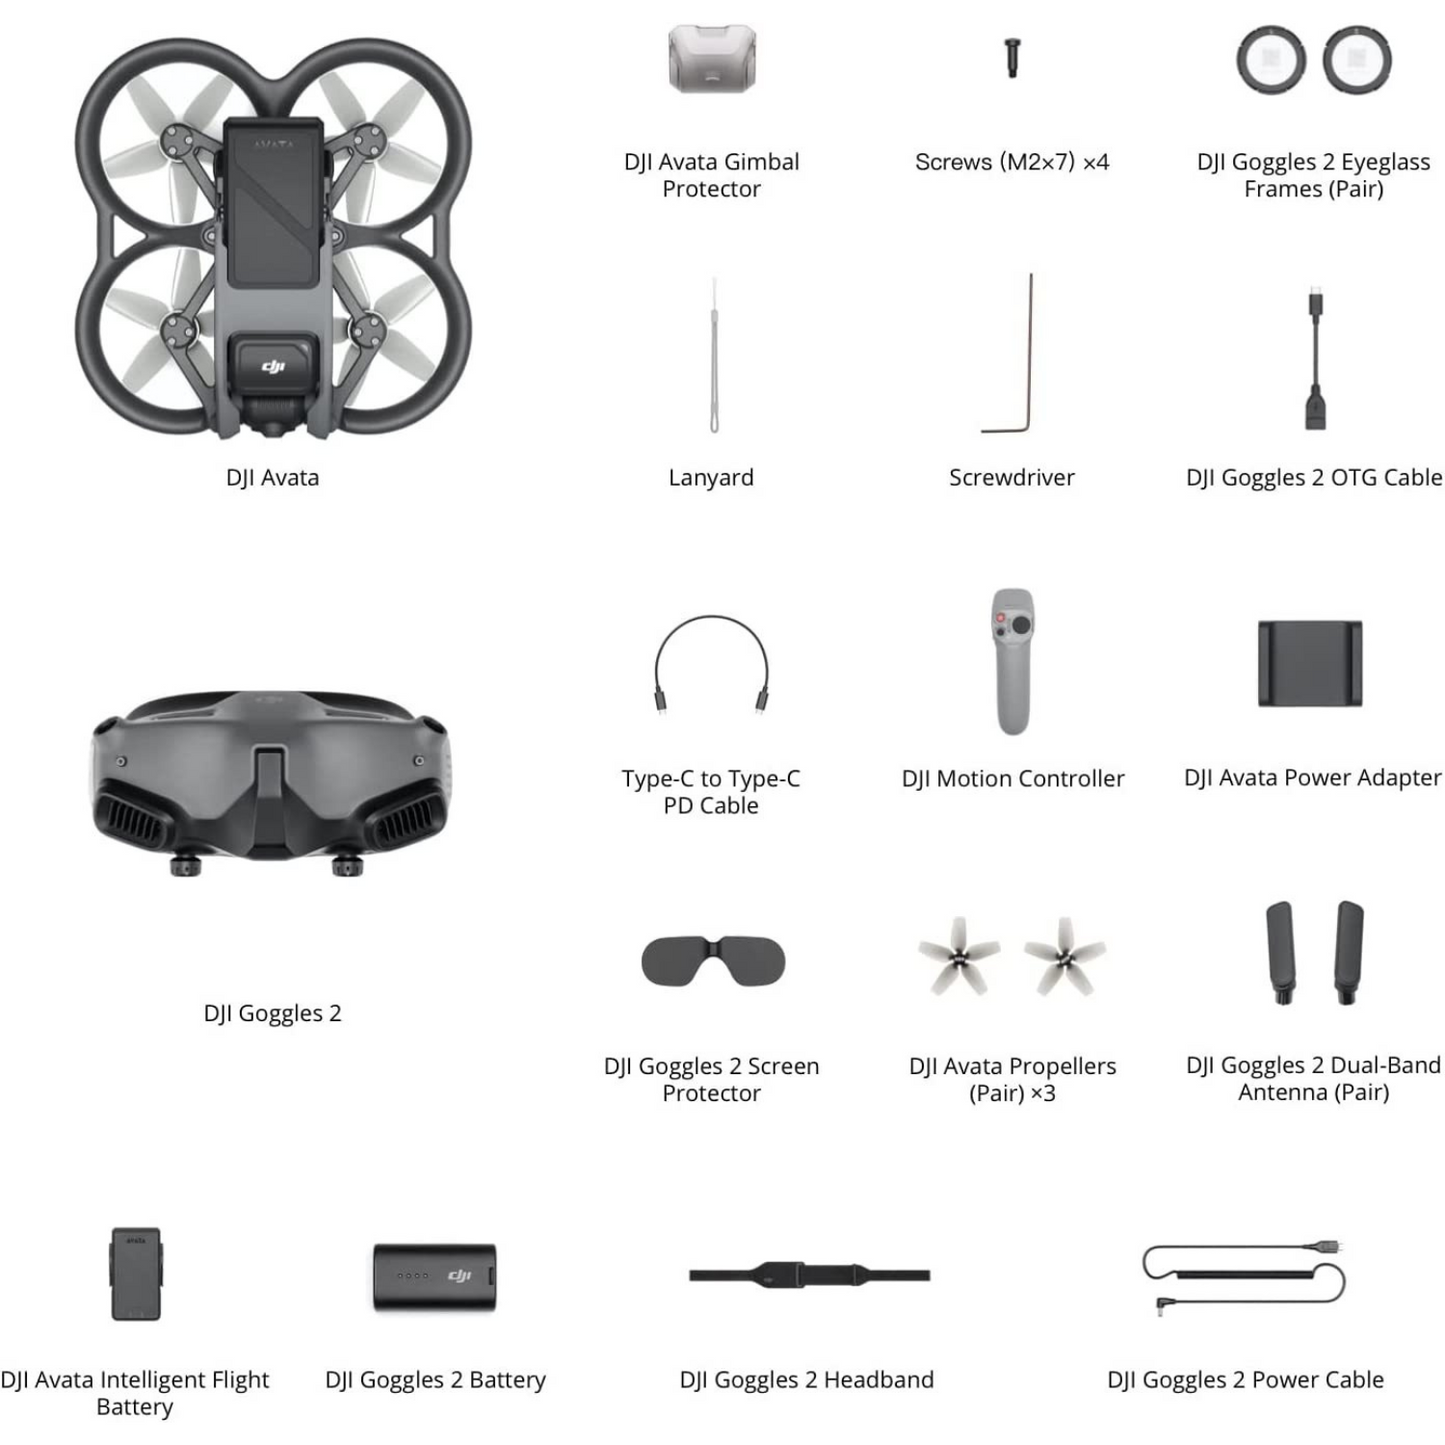 Dji Avata Pro-View Combo (DJI Goggles 2) - First-Person View Drone UAV Quadcopter